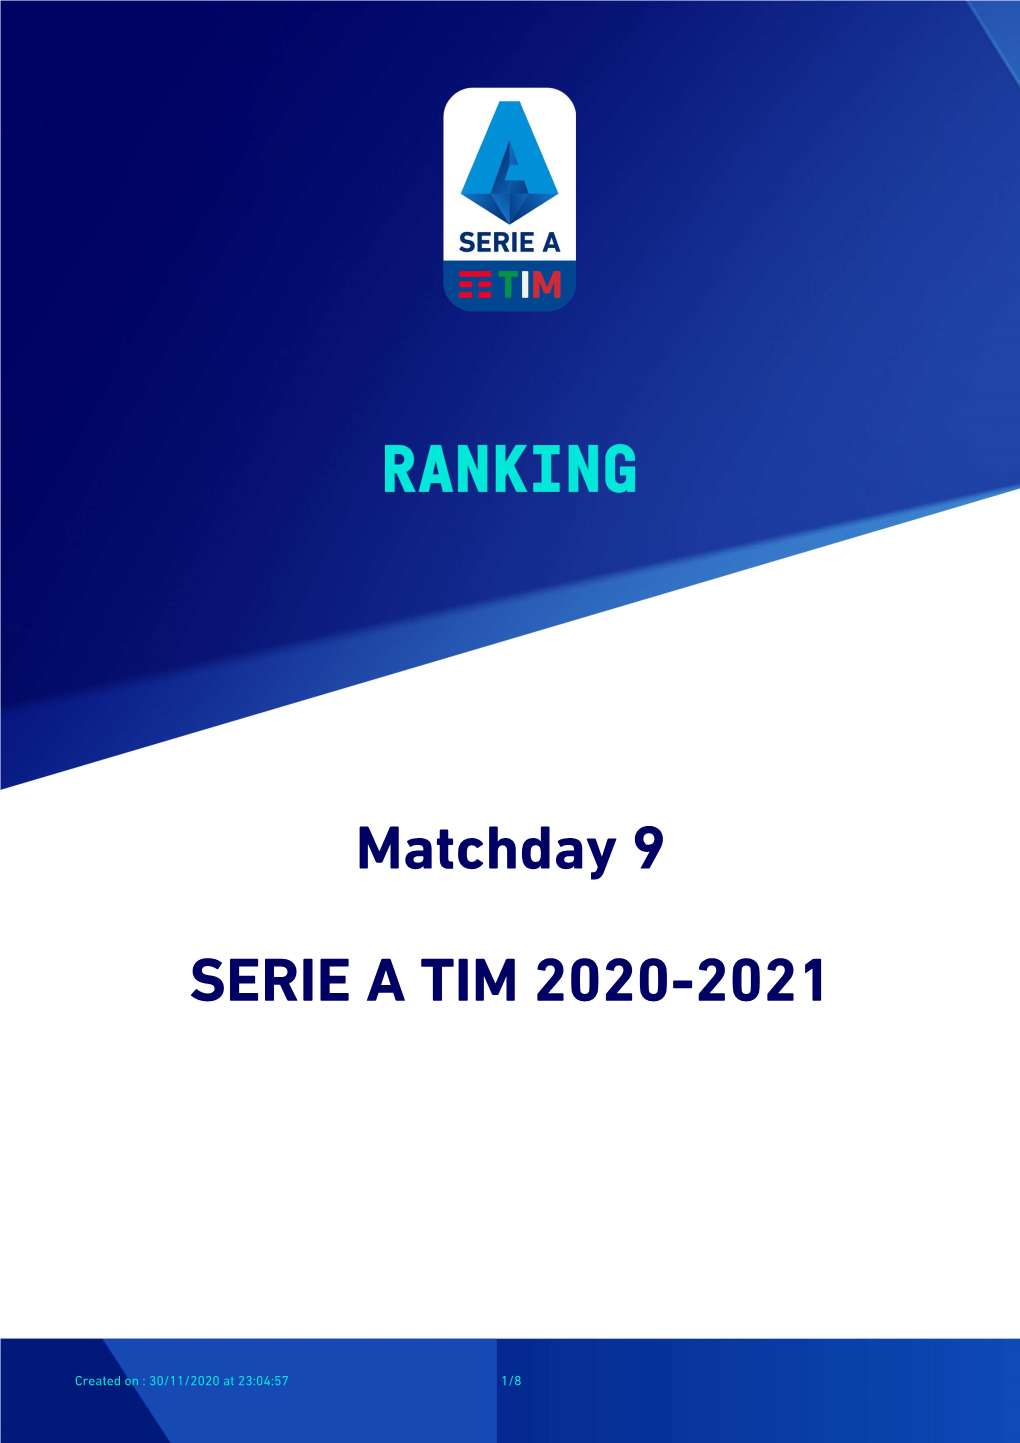 Matchday 9 SERIE a TIM 2020-2021